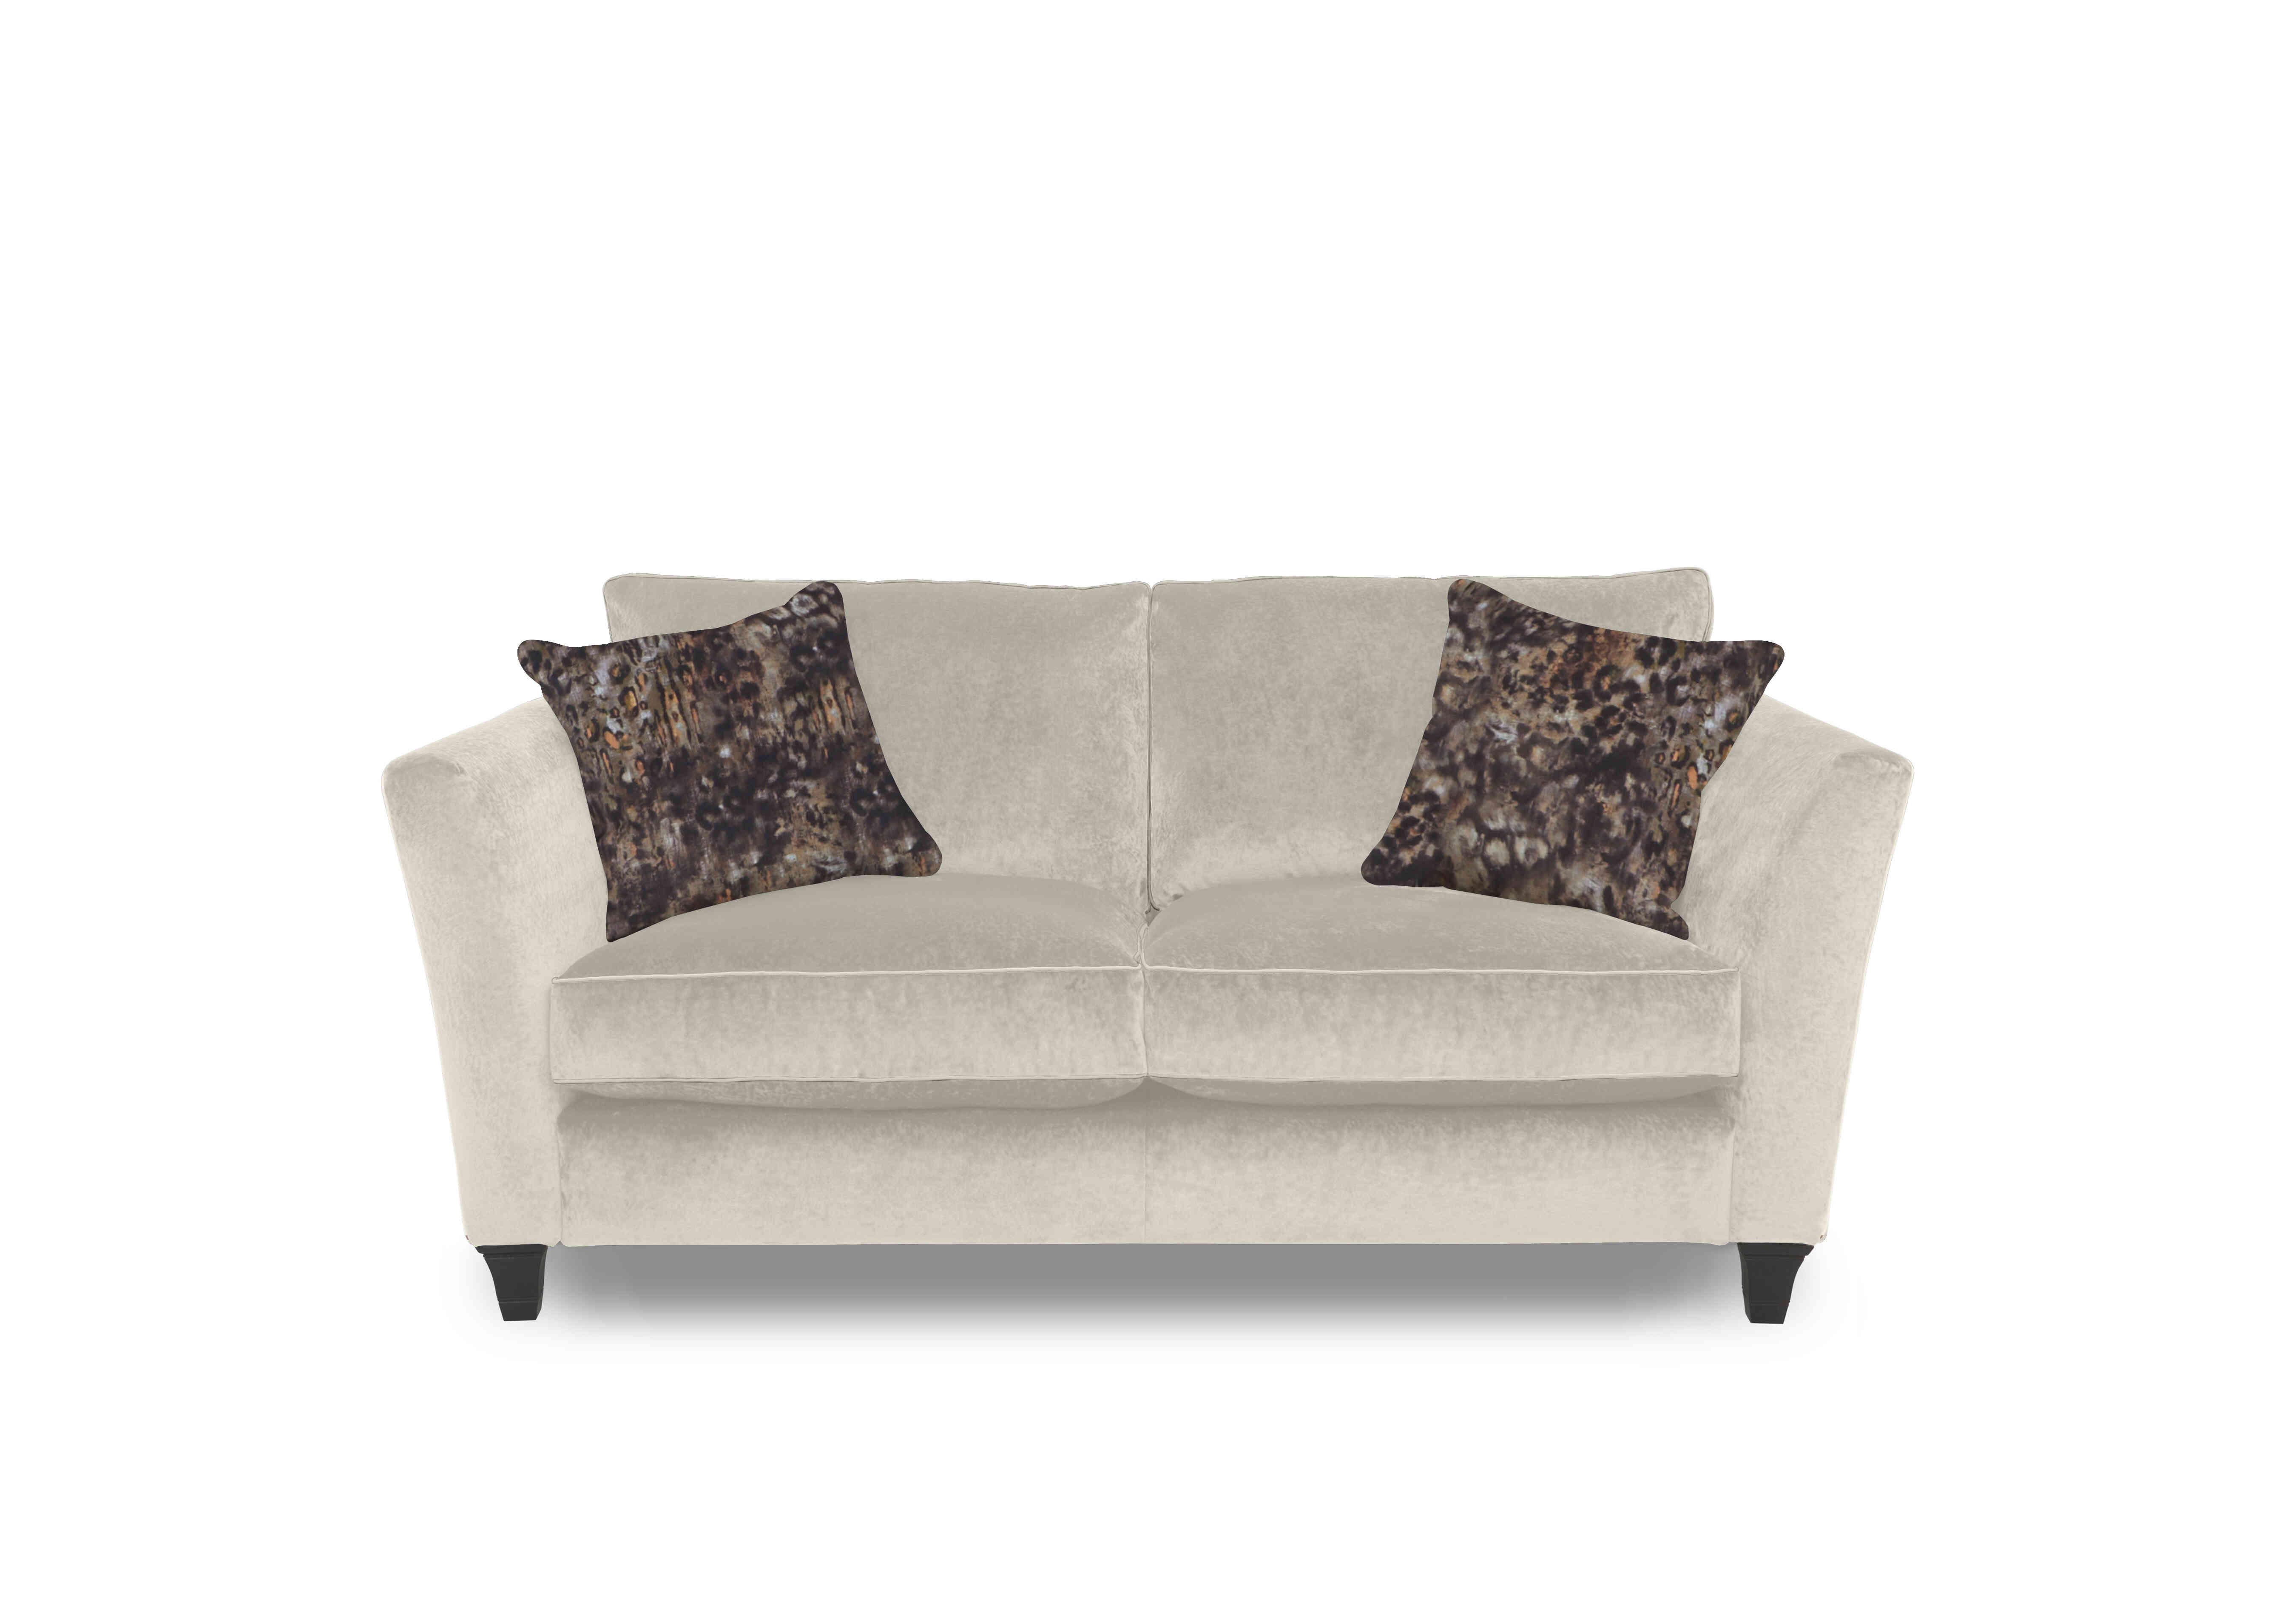 Modern Classics Victoria Park 2 Seater Sofa in Remini Pebble Sp Mf on Furniture Village